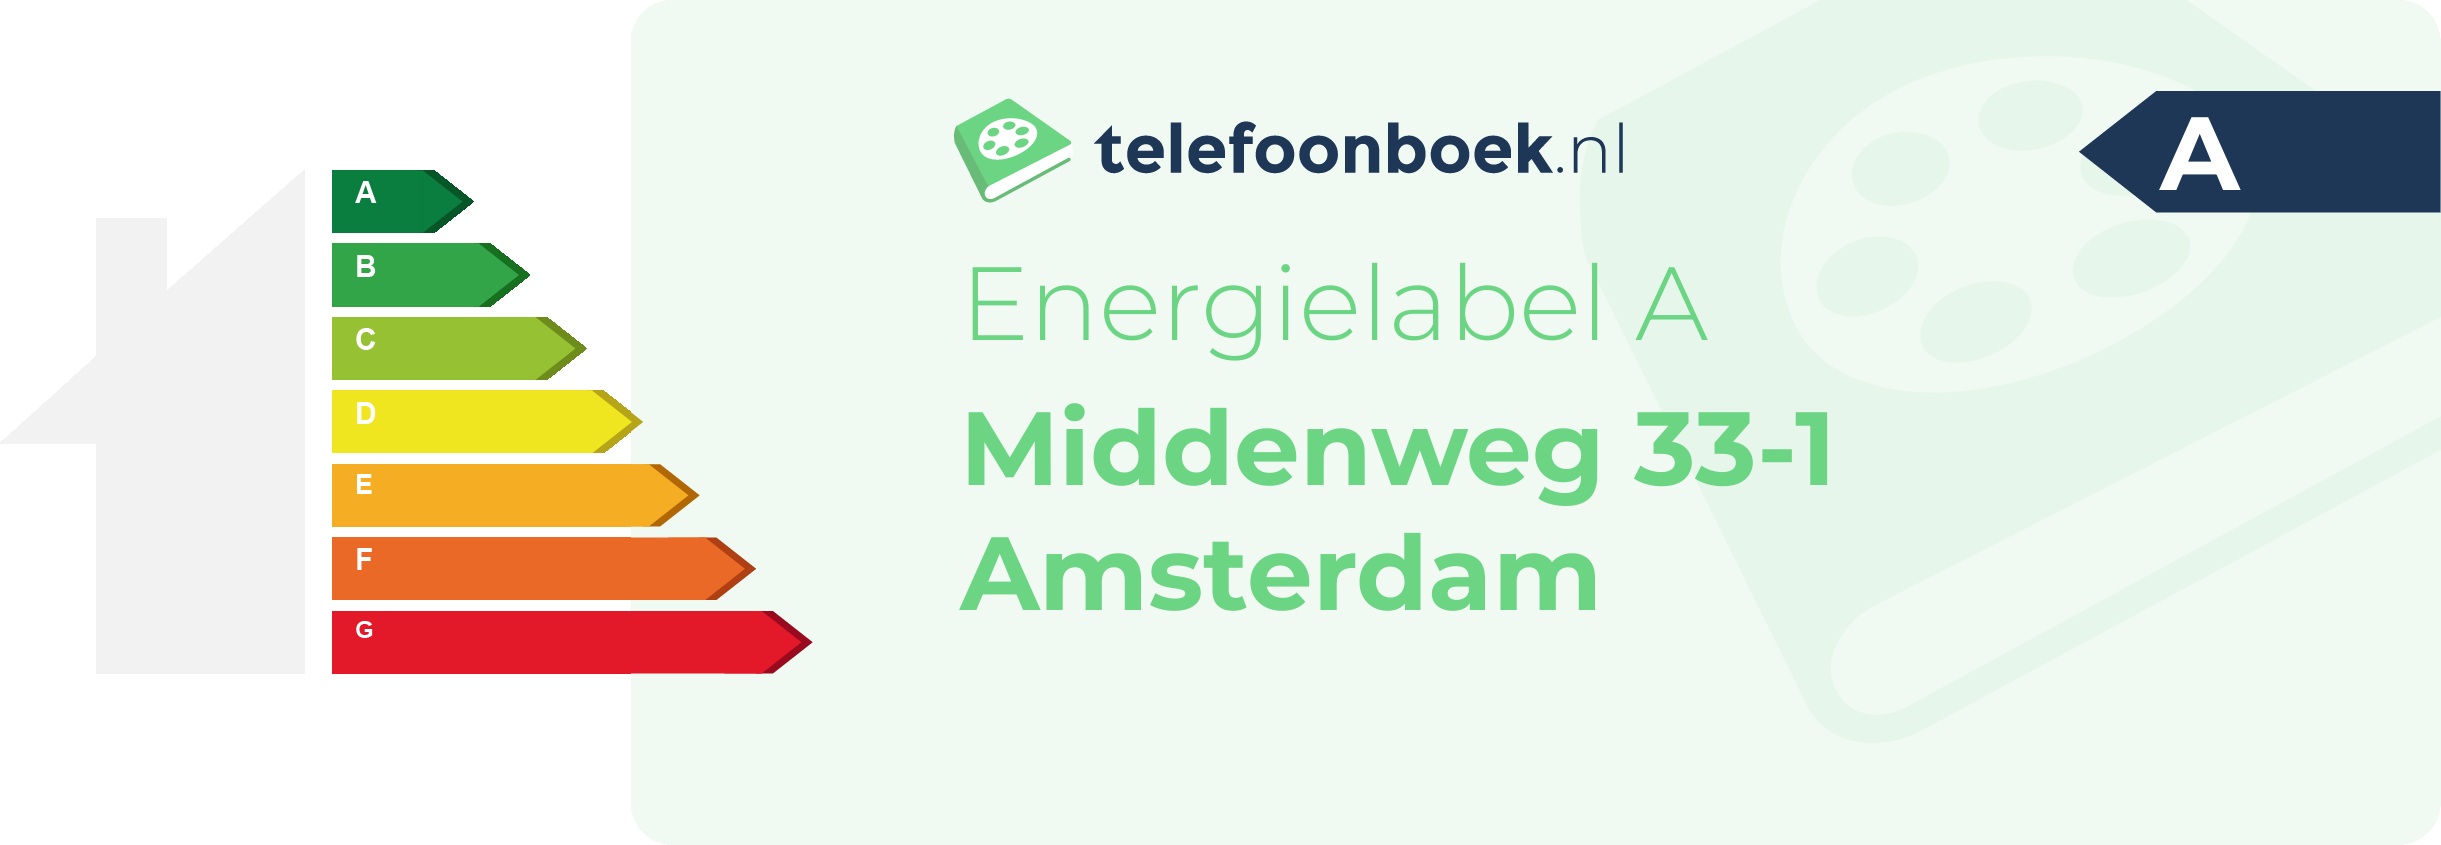 Energielabel Middenweg 33-1 Amsterdam